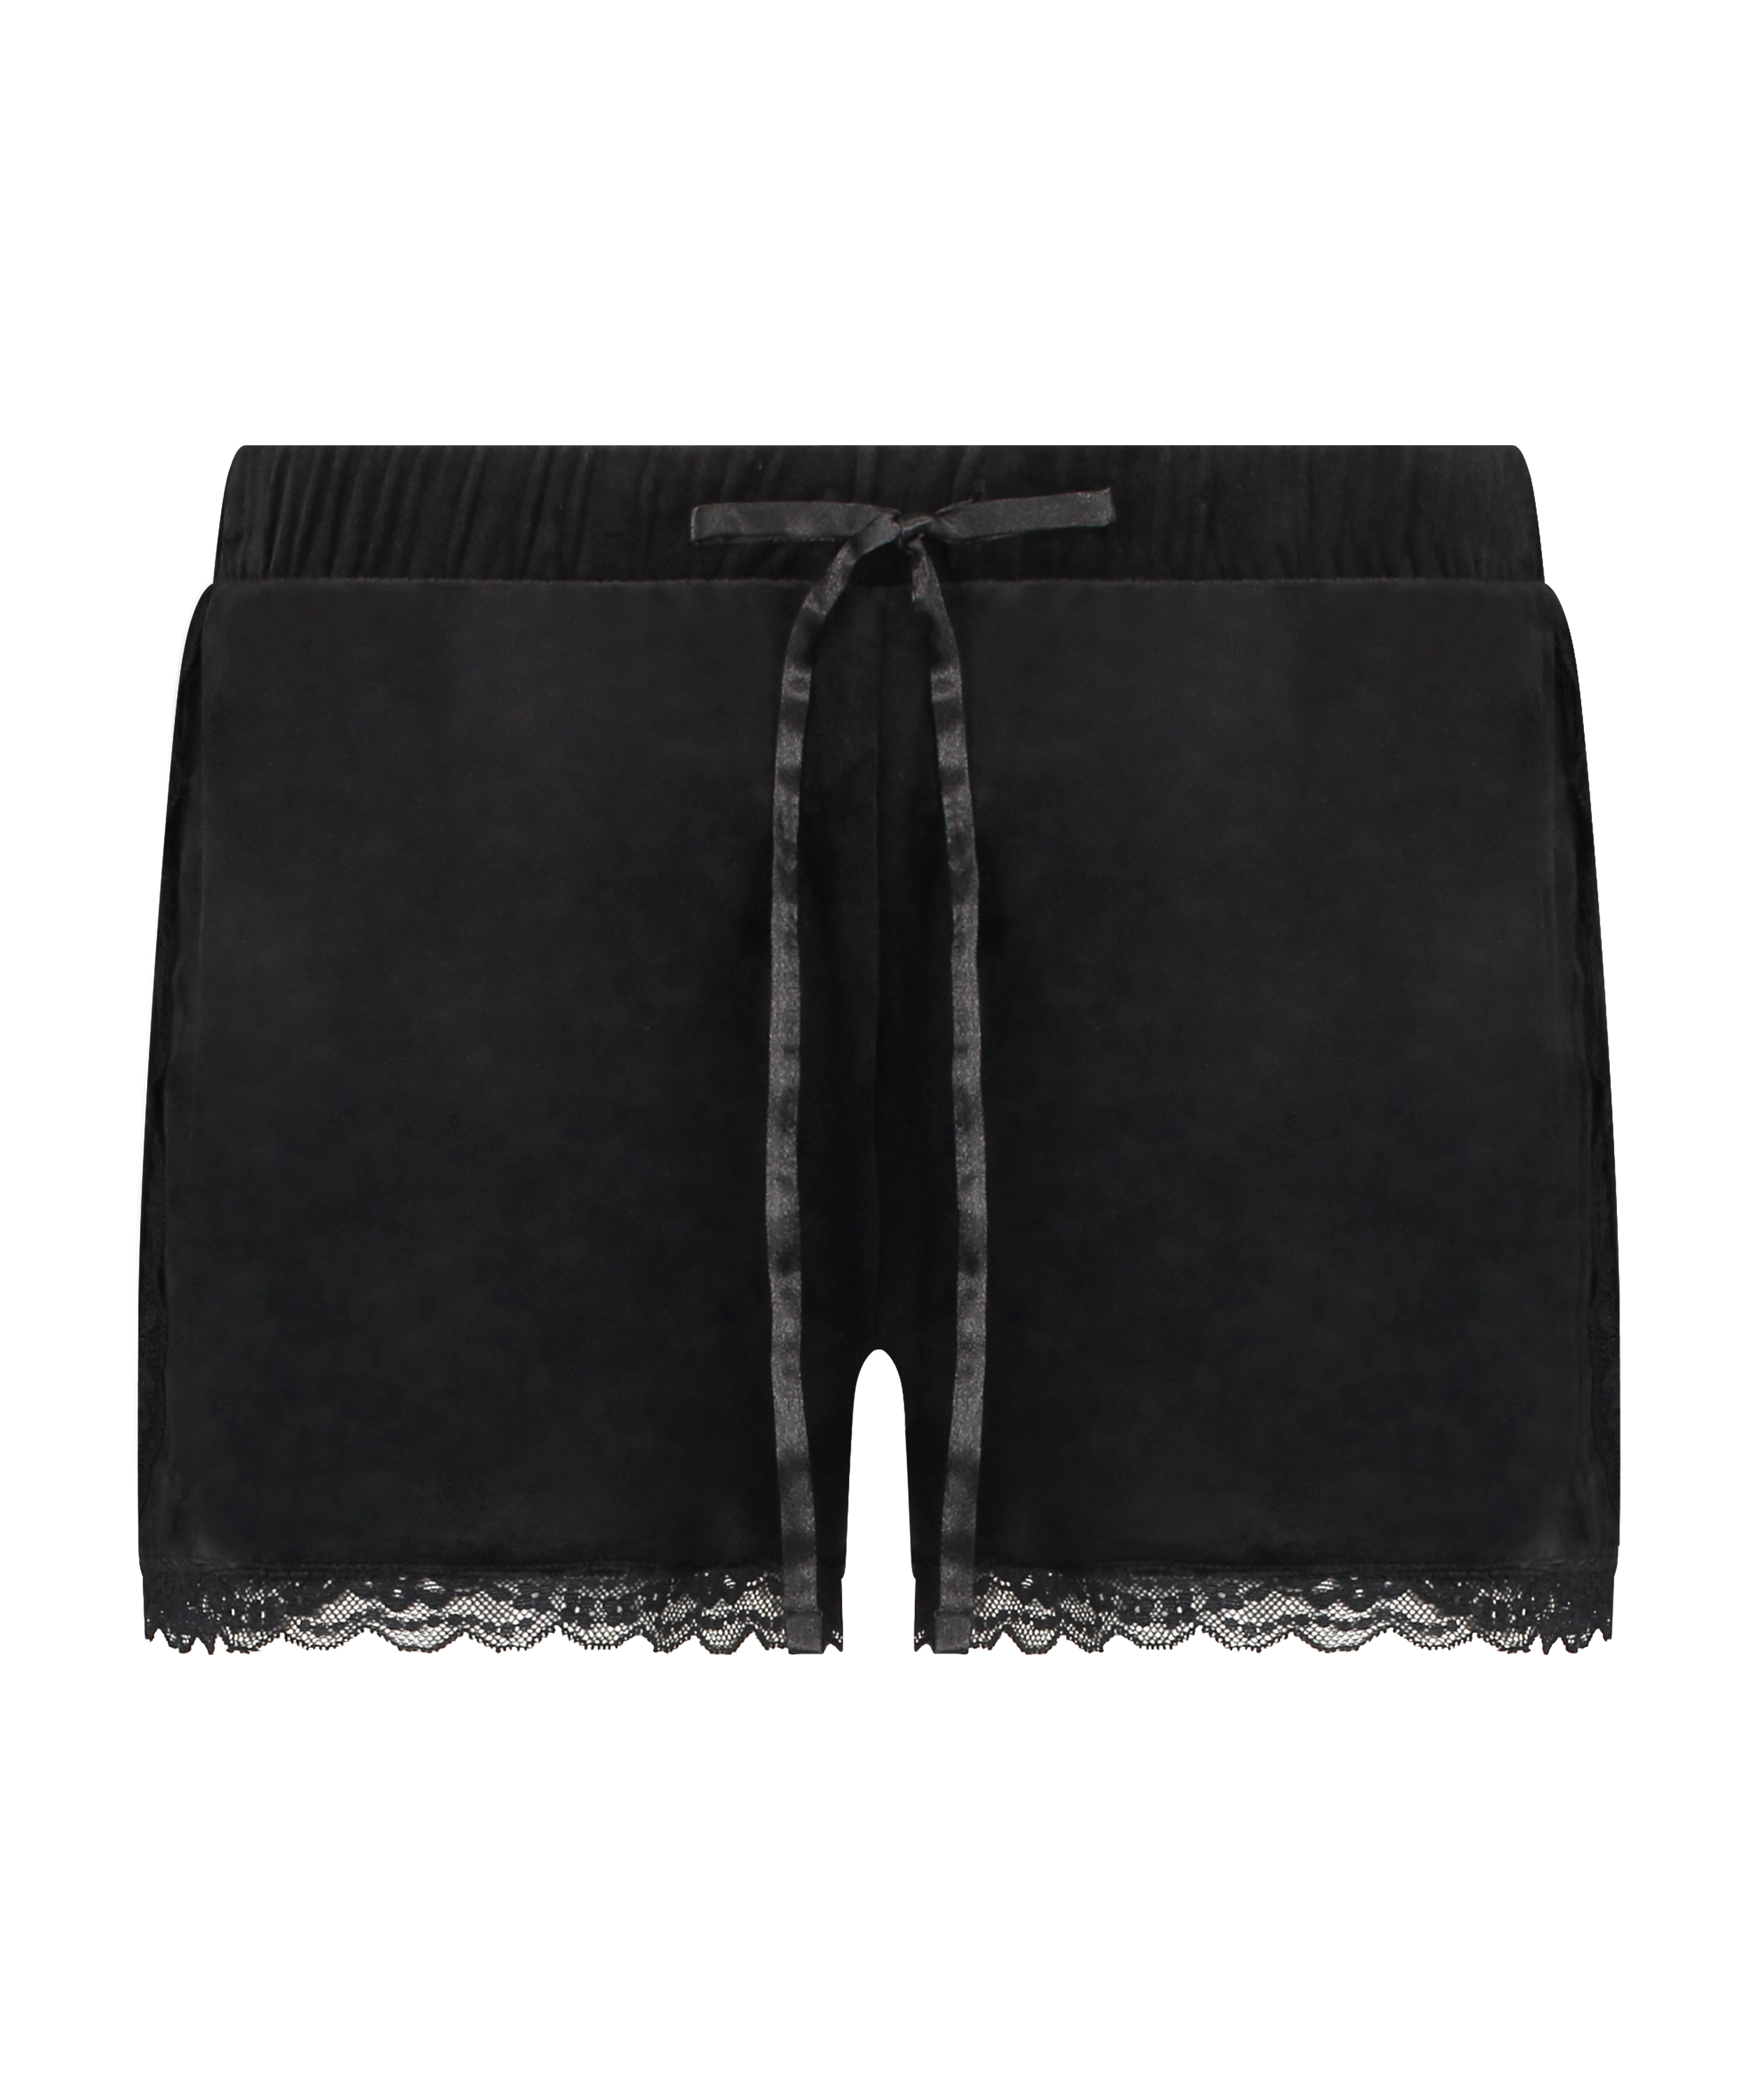 Velvet Lace Shorts, Black, main